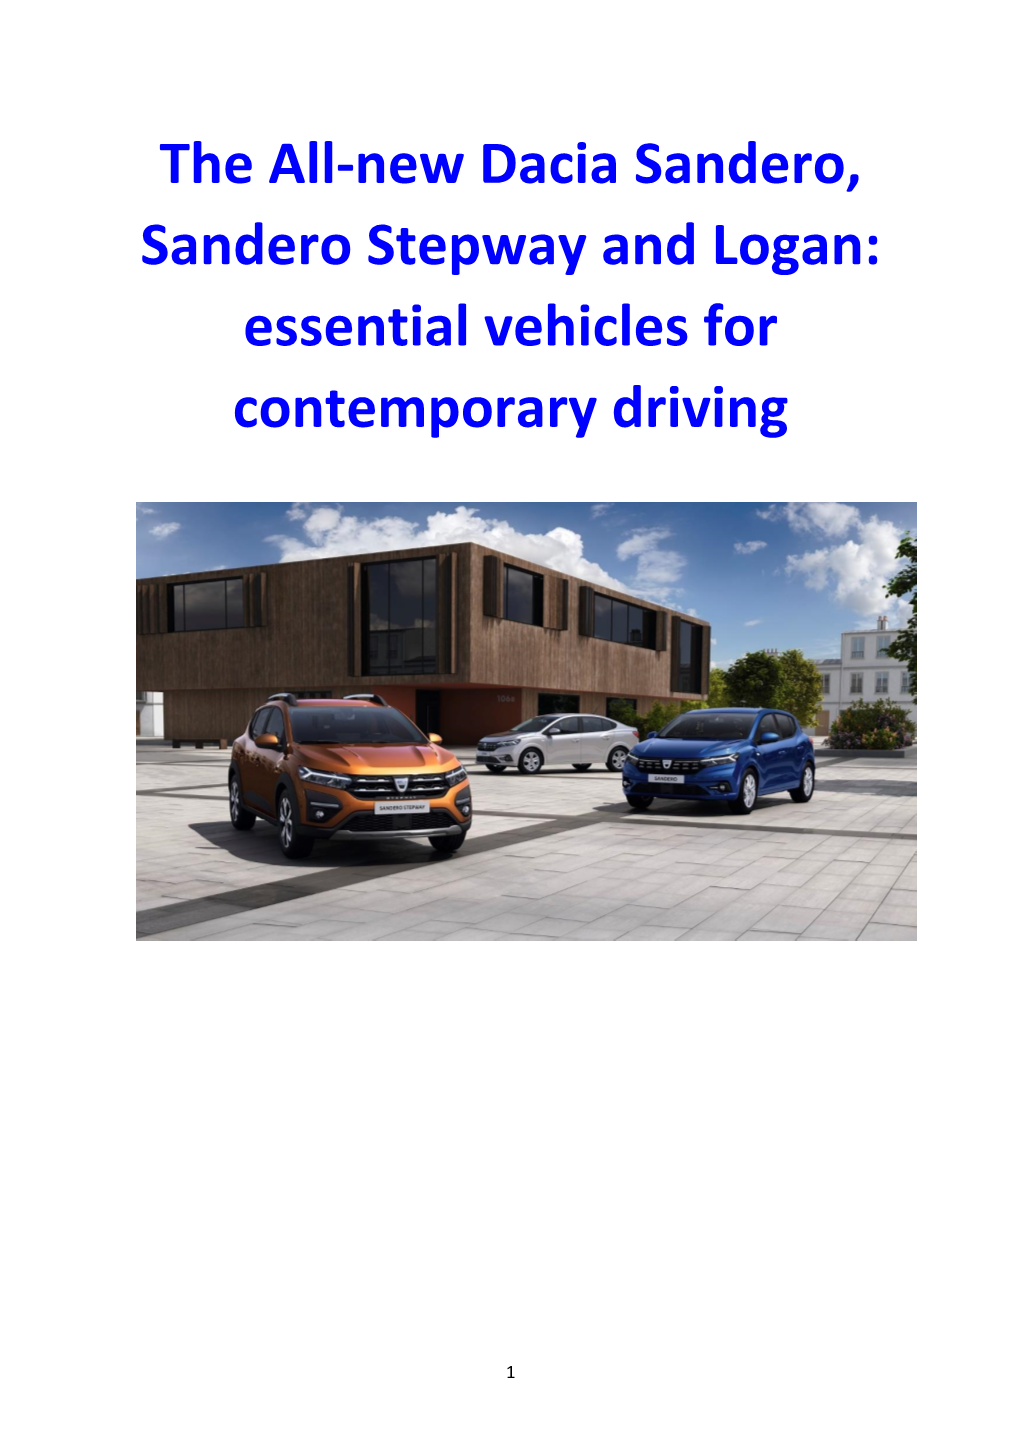 The All-New Dacia Sandero, Sandero Stepway and Logan